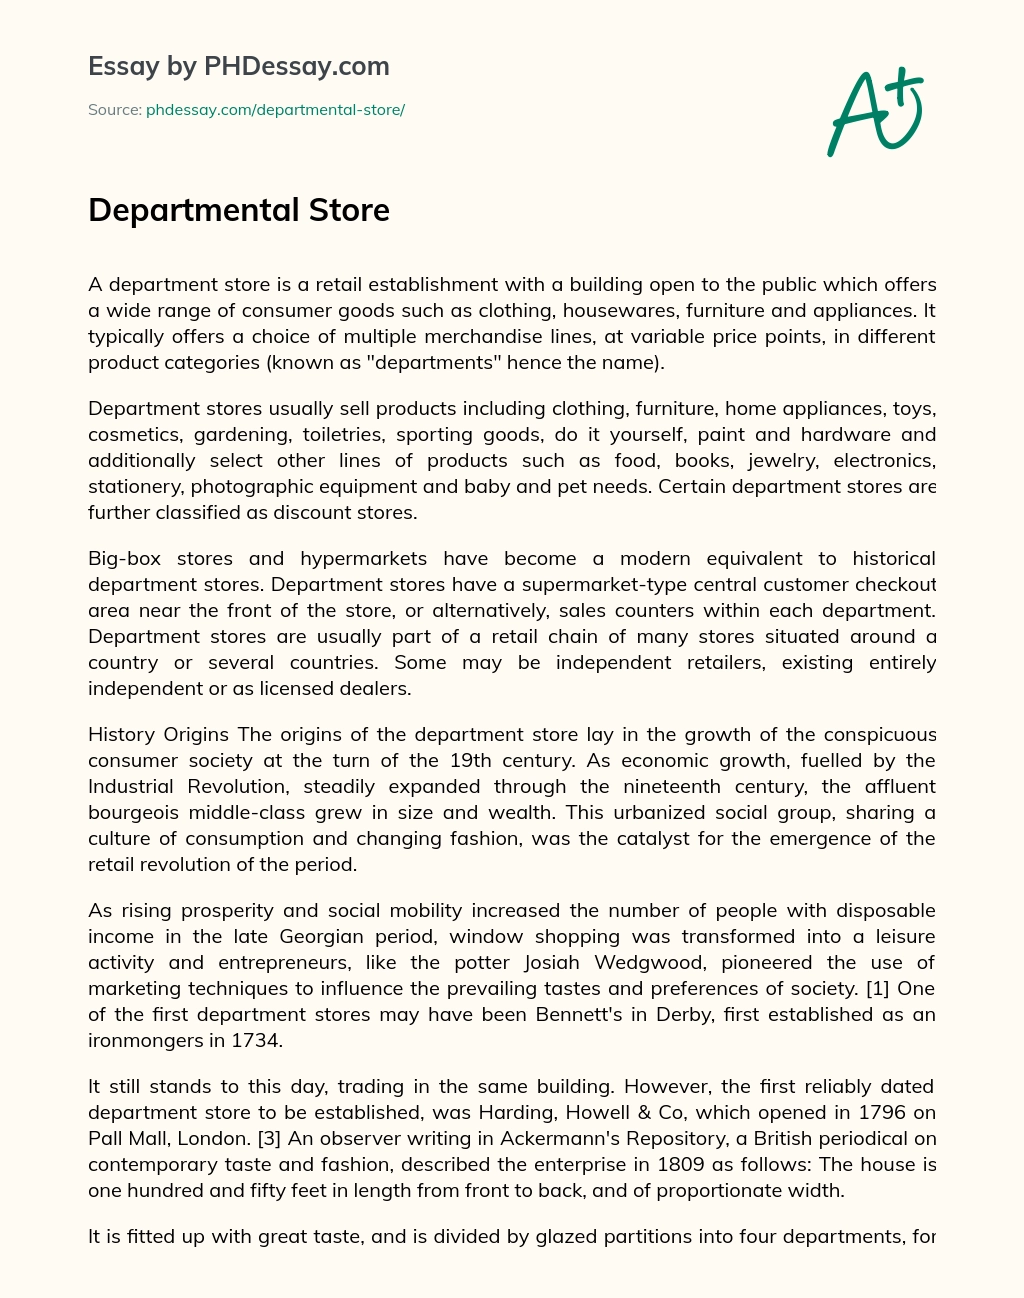 essay on departmental store